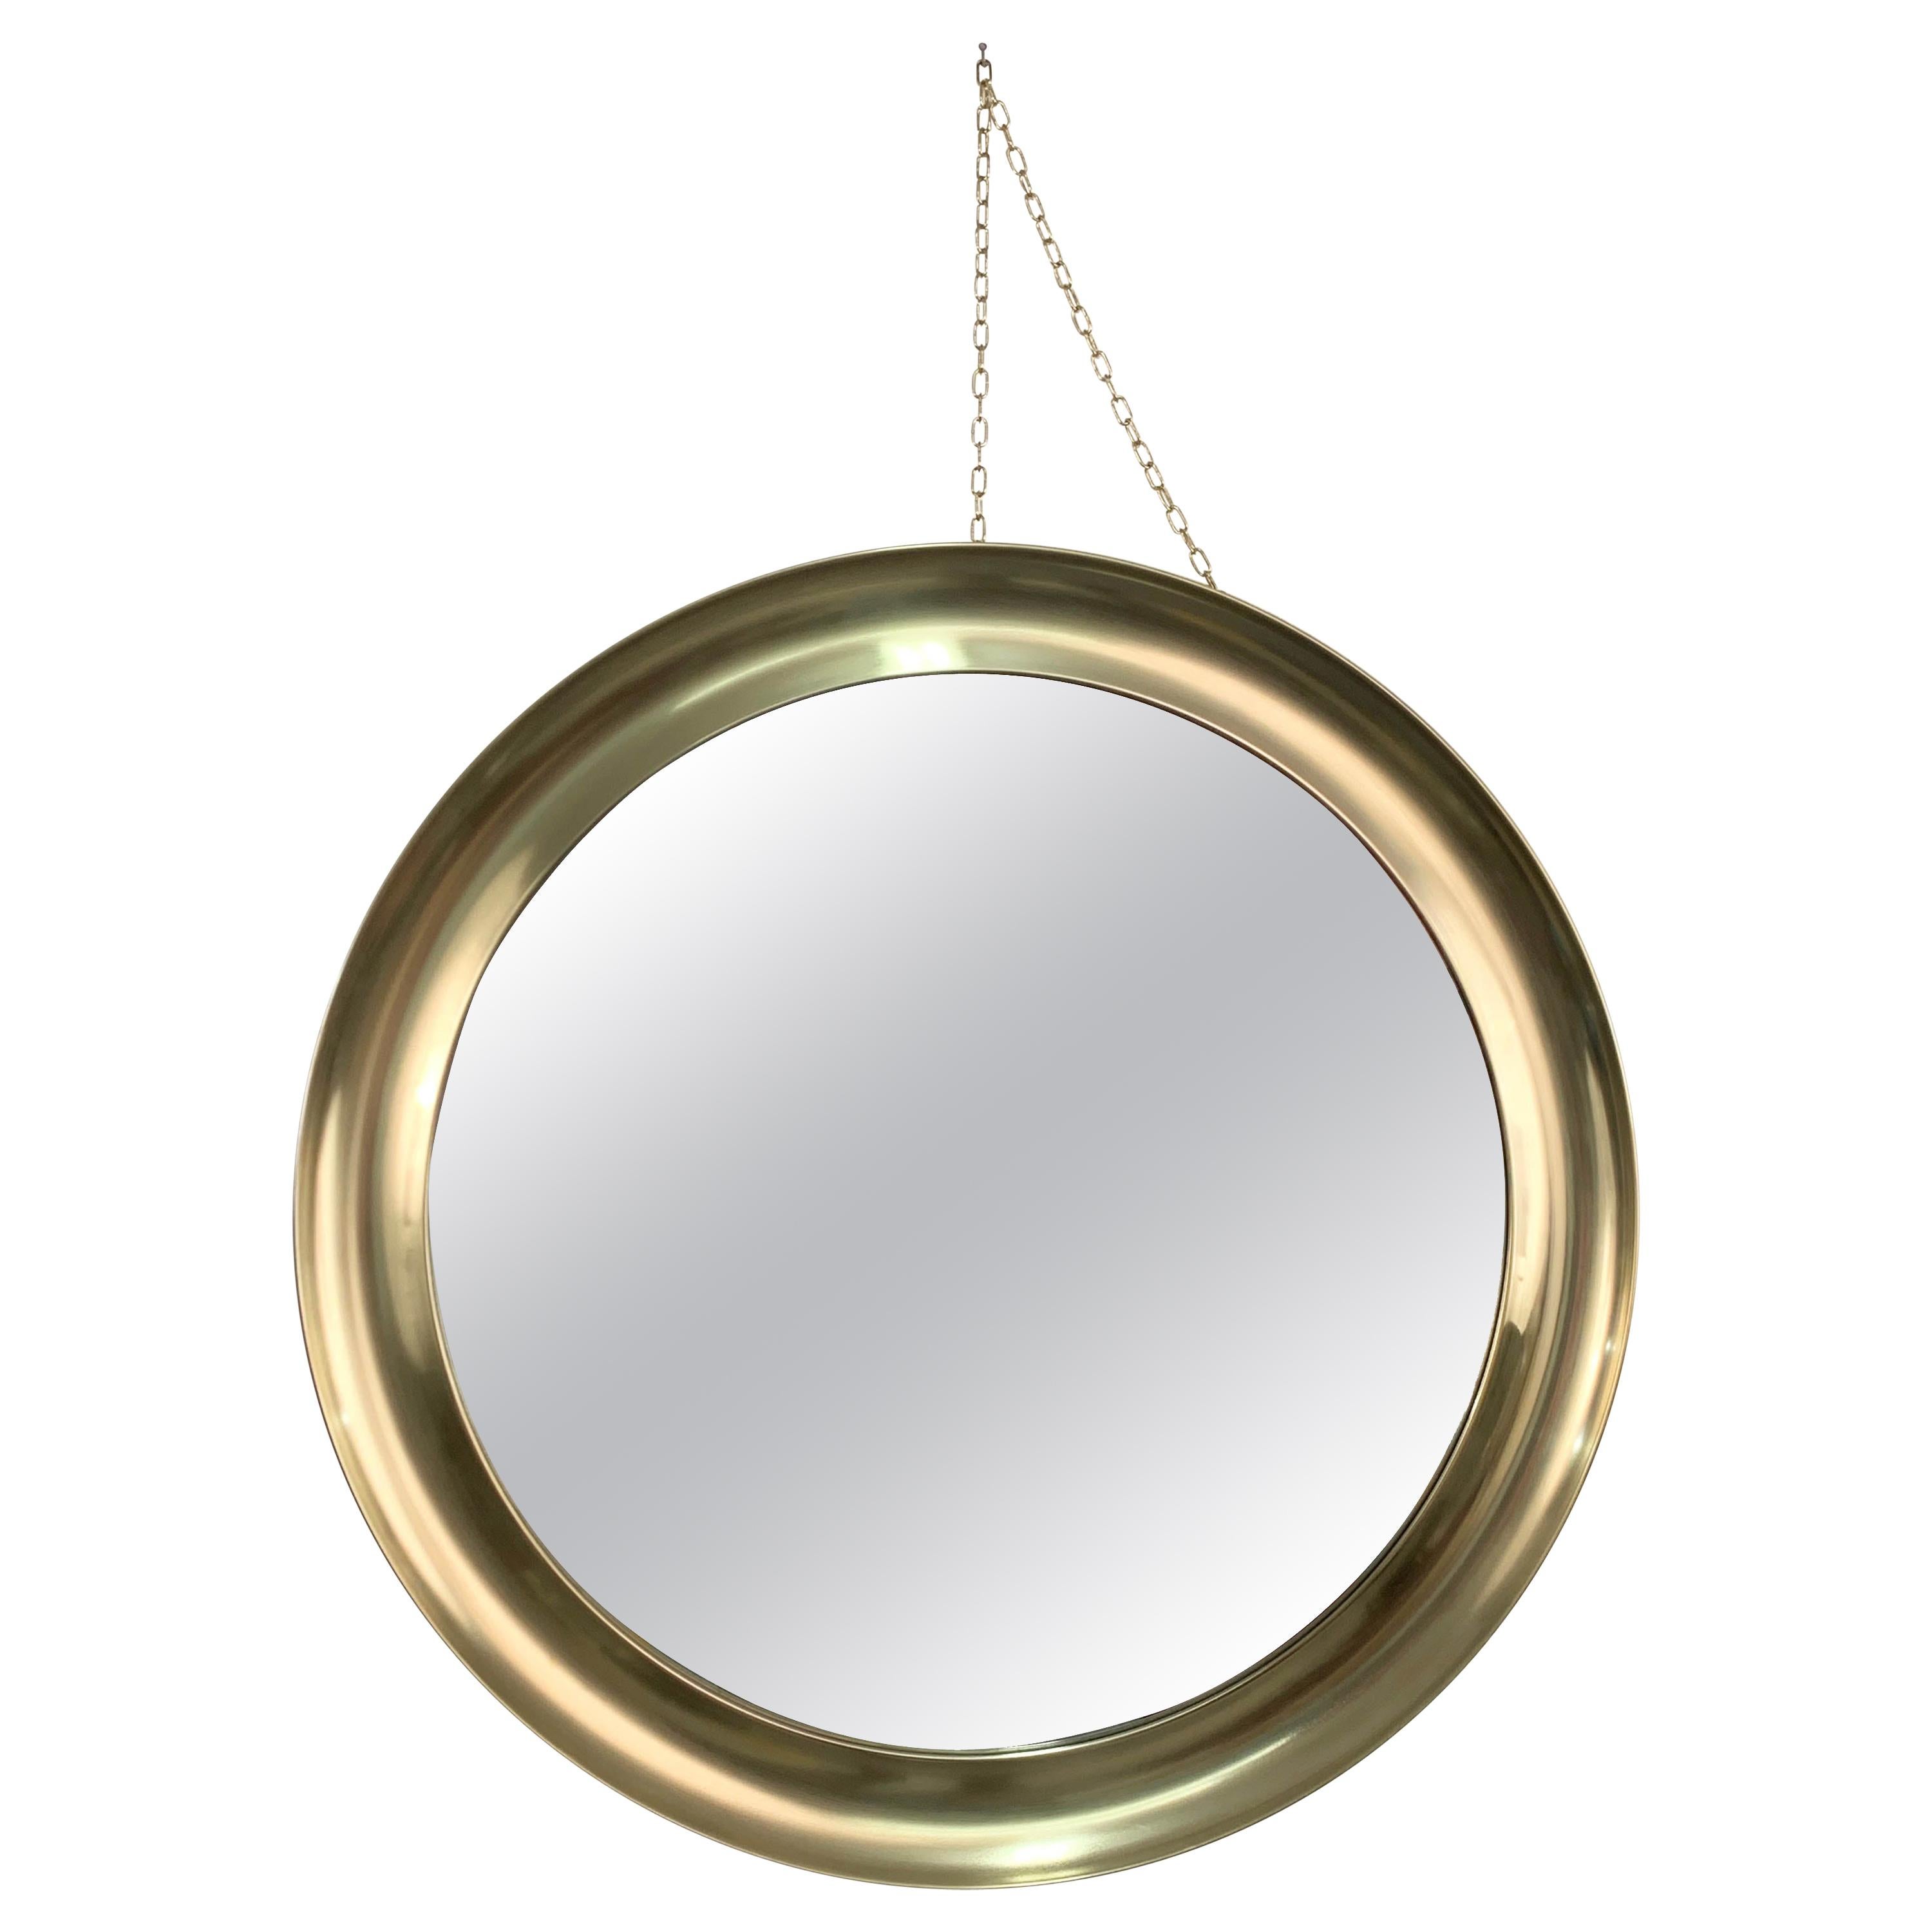 Sergio Mazza Midcentury Round Brass Italian "Narciso" Mirror for Artemide, 1960s For Sale